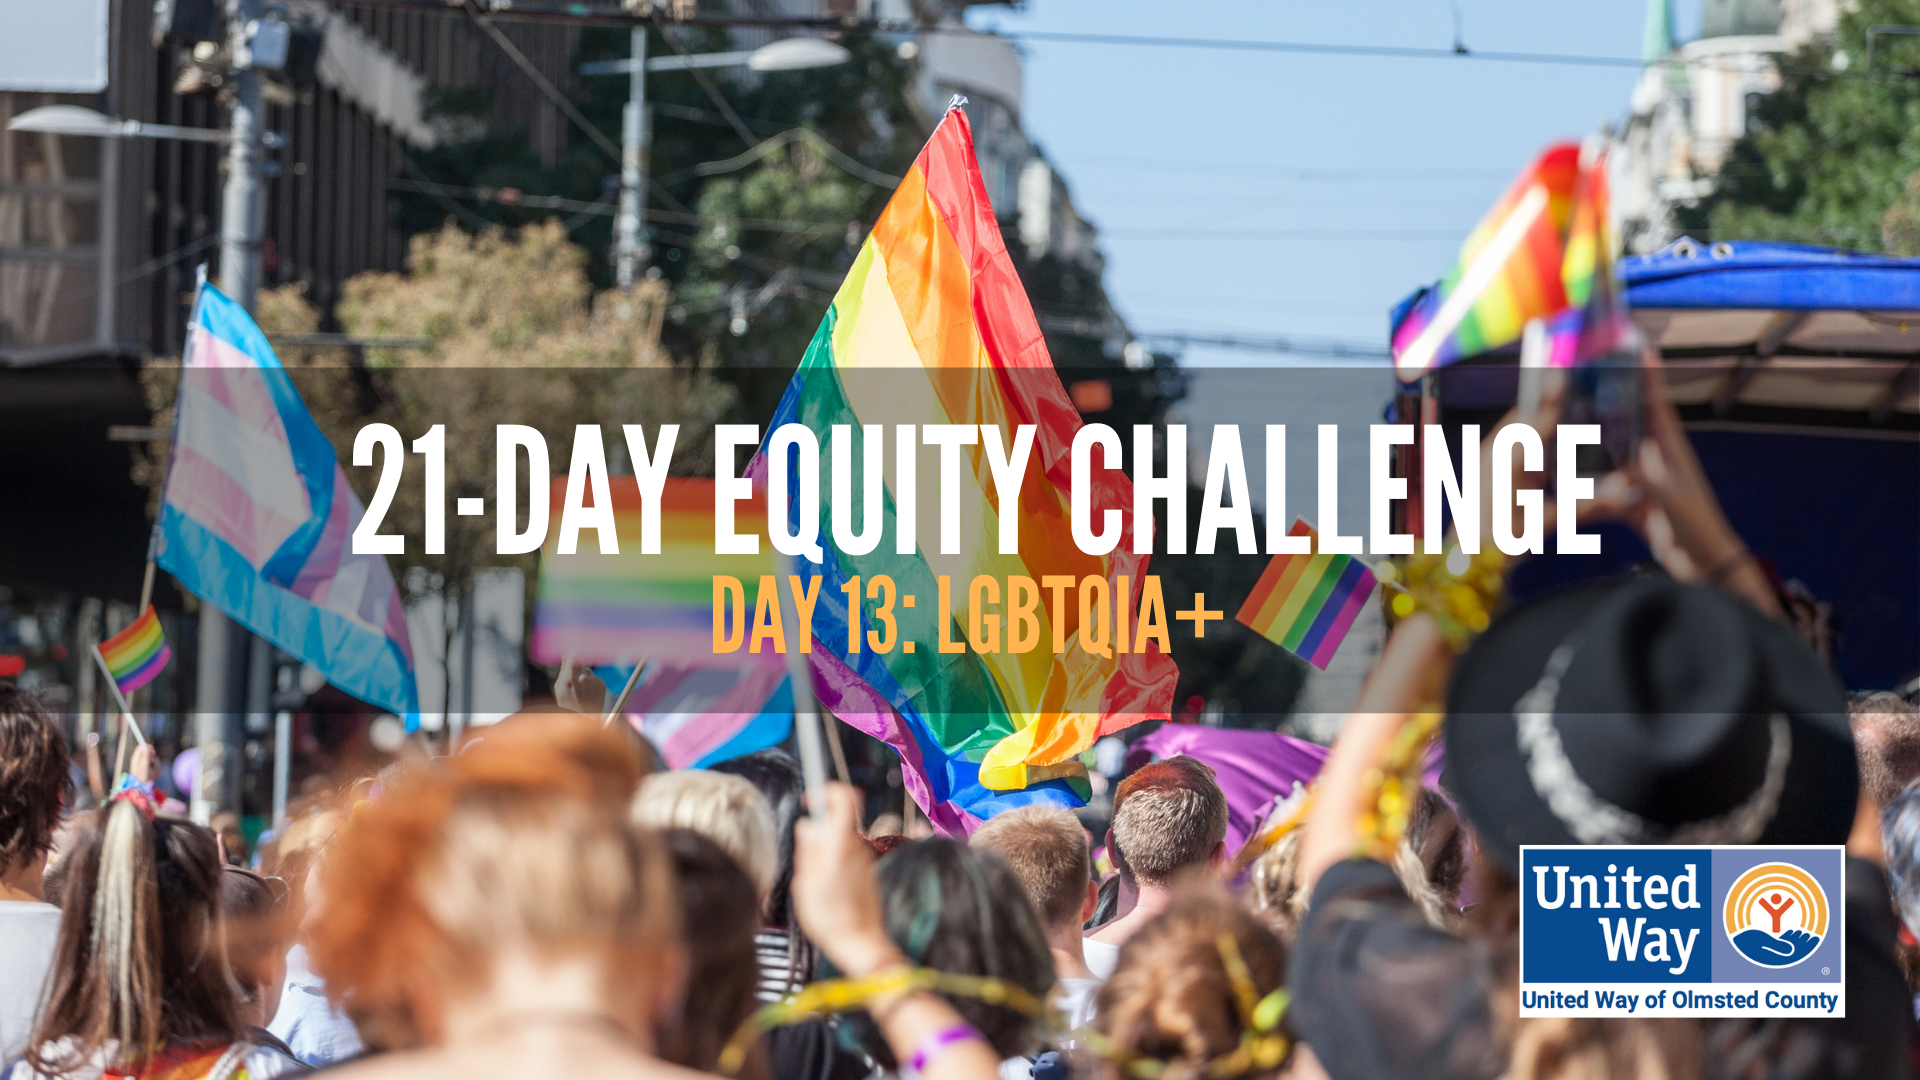 Day 13: LGBTQIA+